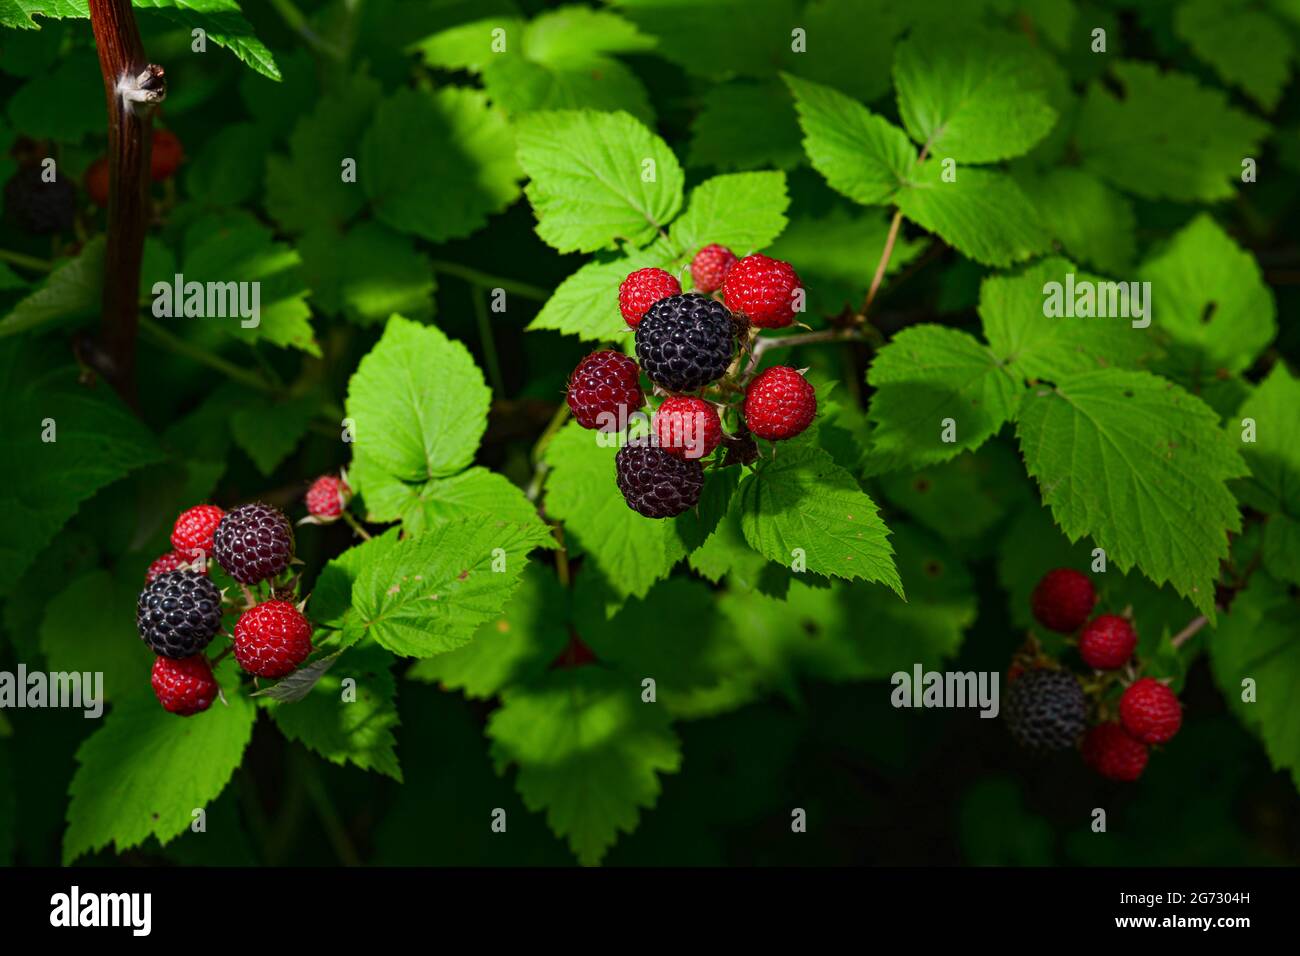 branch of raspberries in a garden. Macro photo Stock Photo